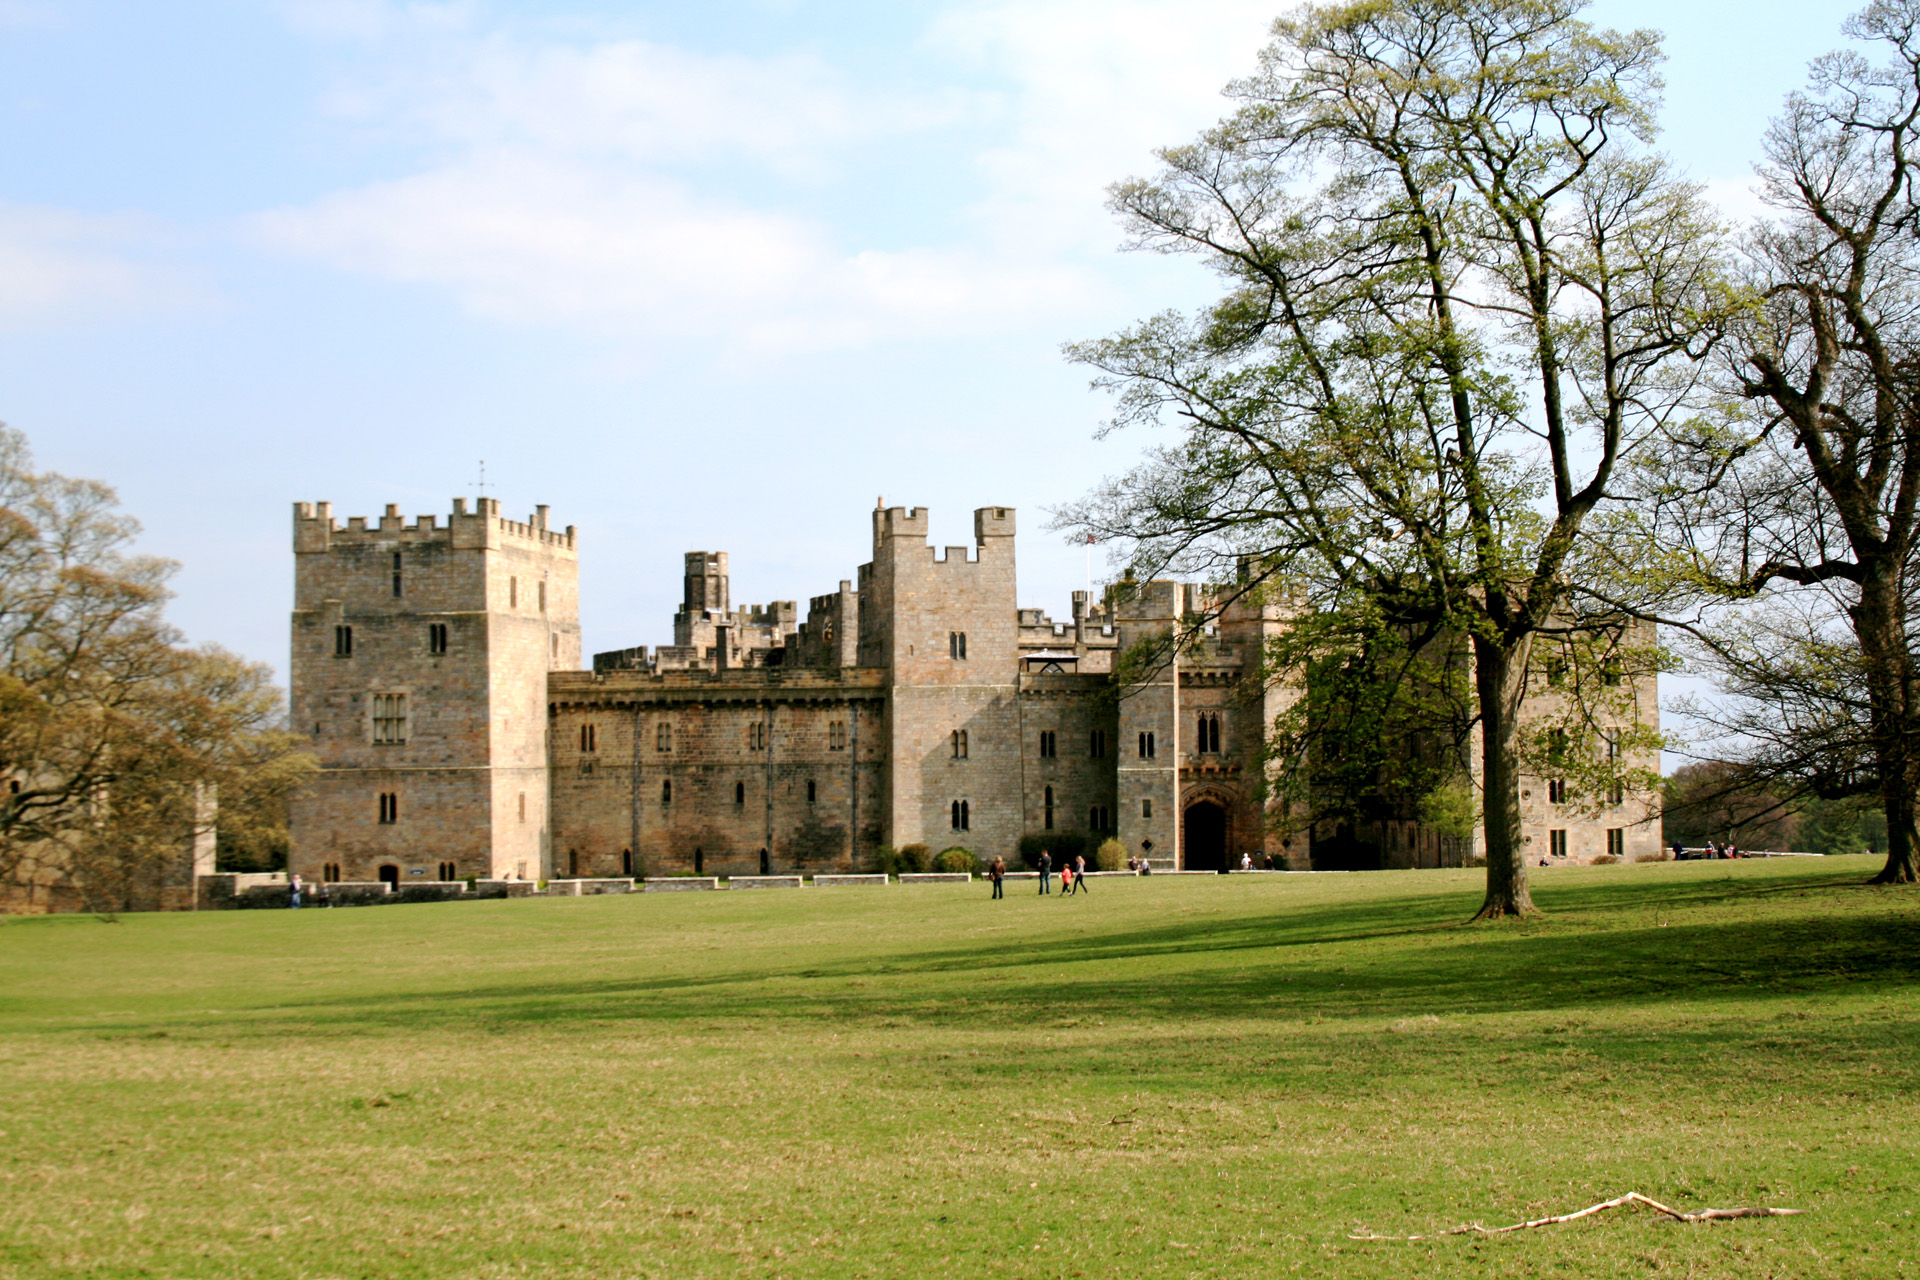 Damsel was filmed at Raby Castle